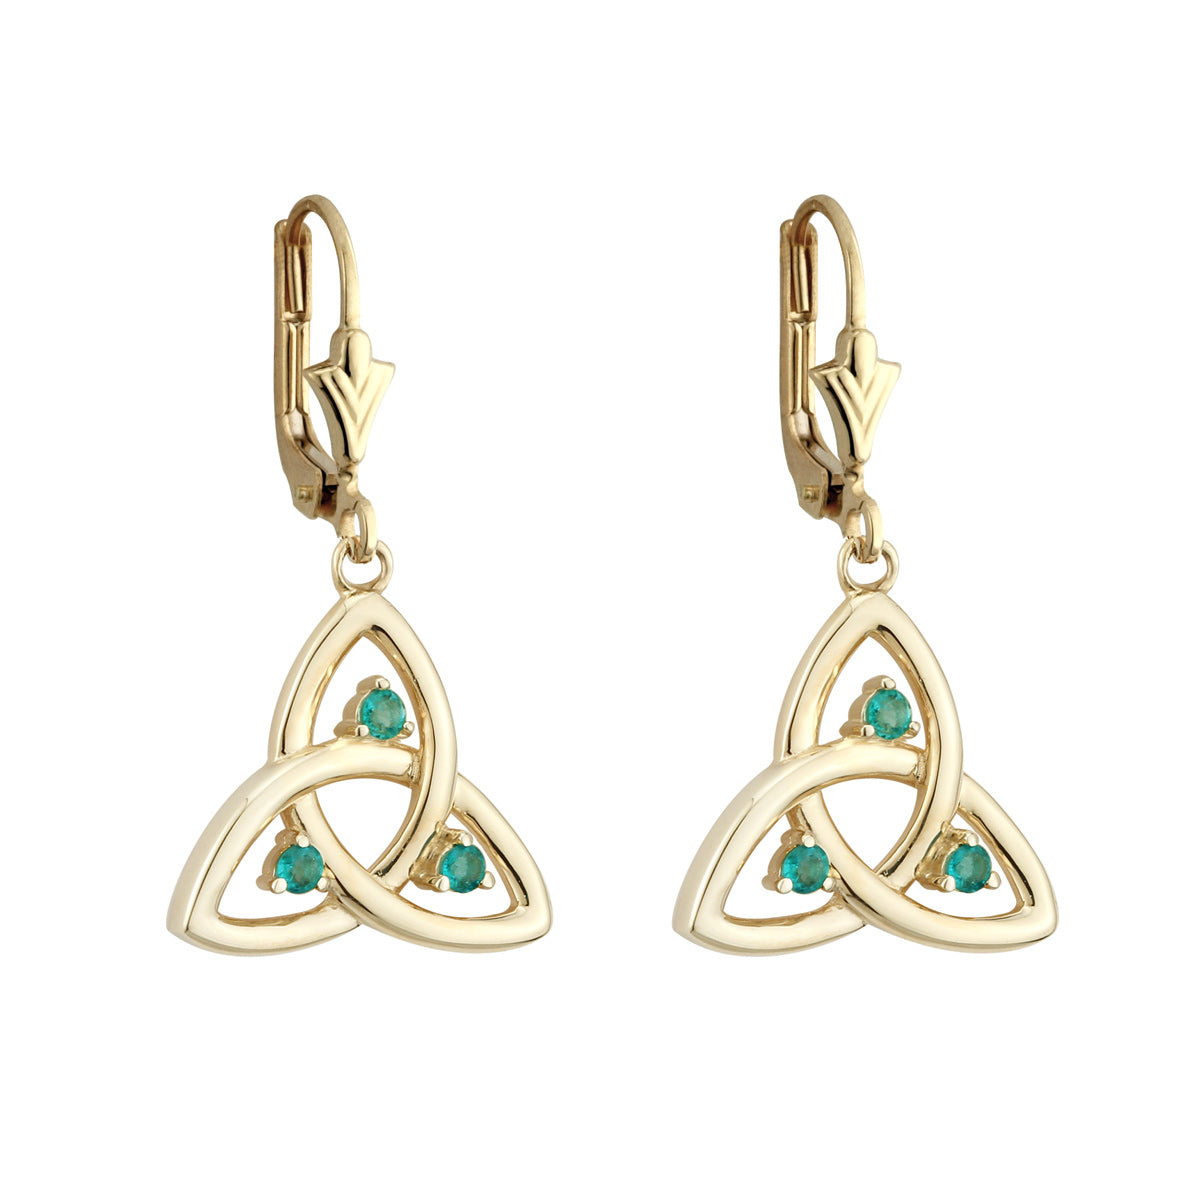 14K gold emerald trinity knot drop earrings s33500 from Solvar